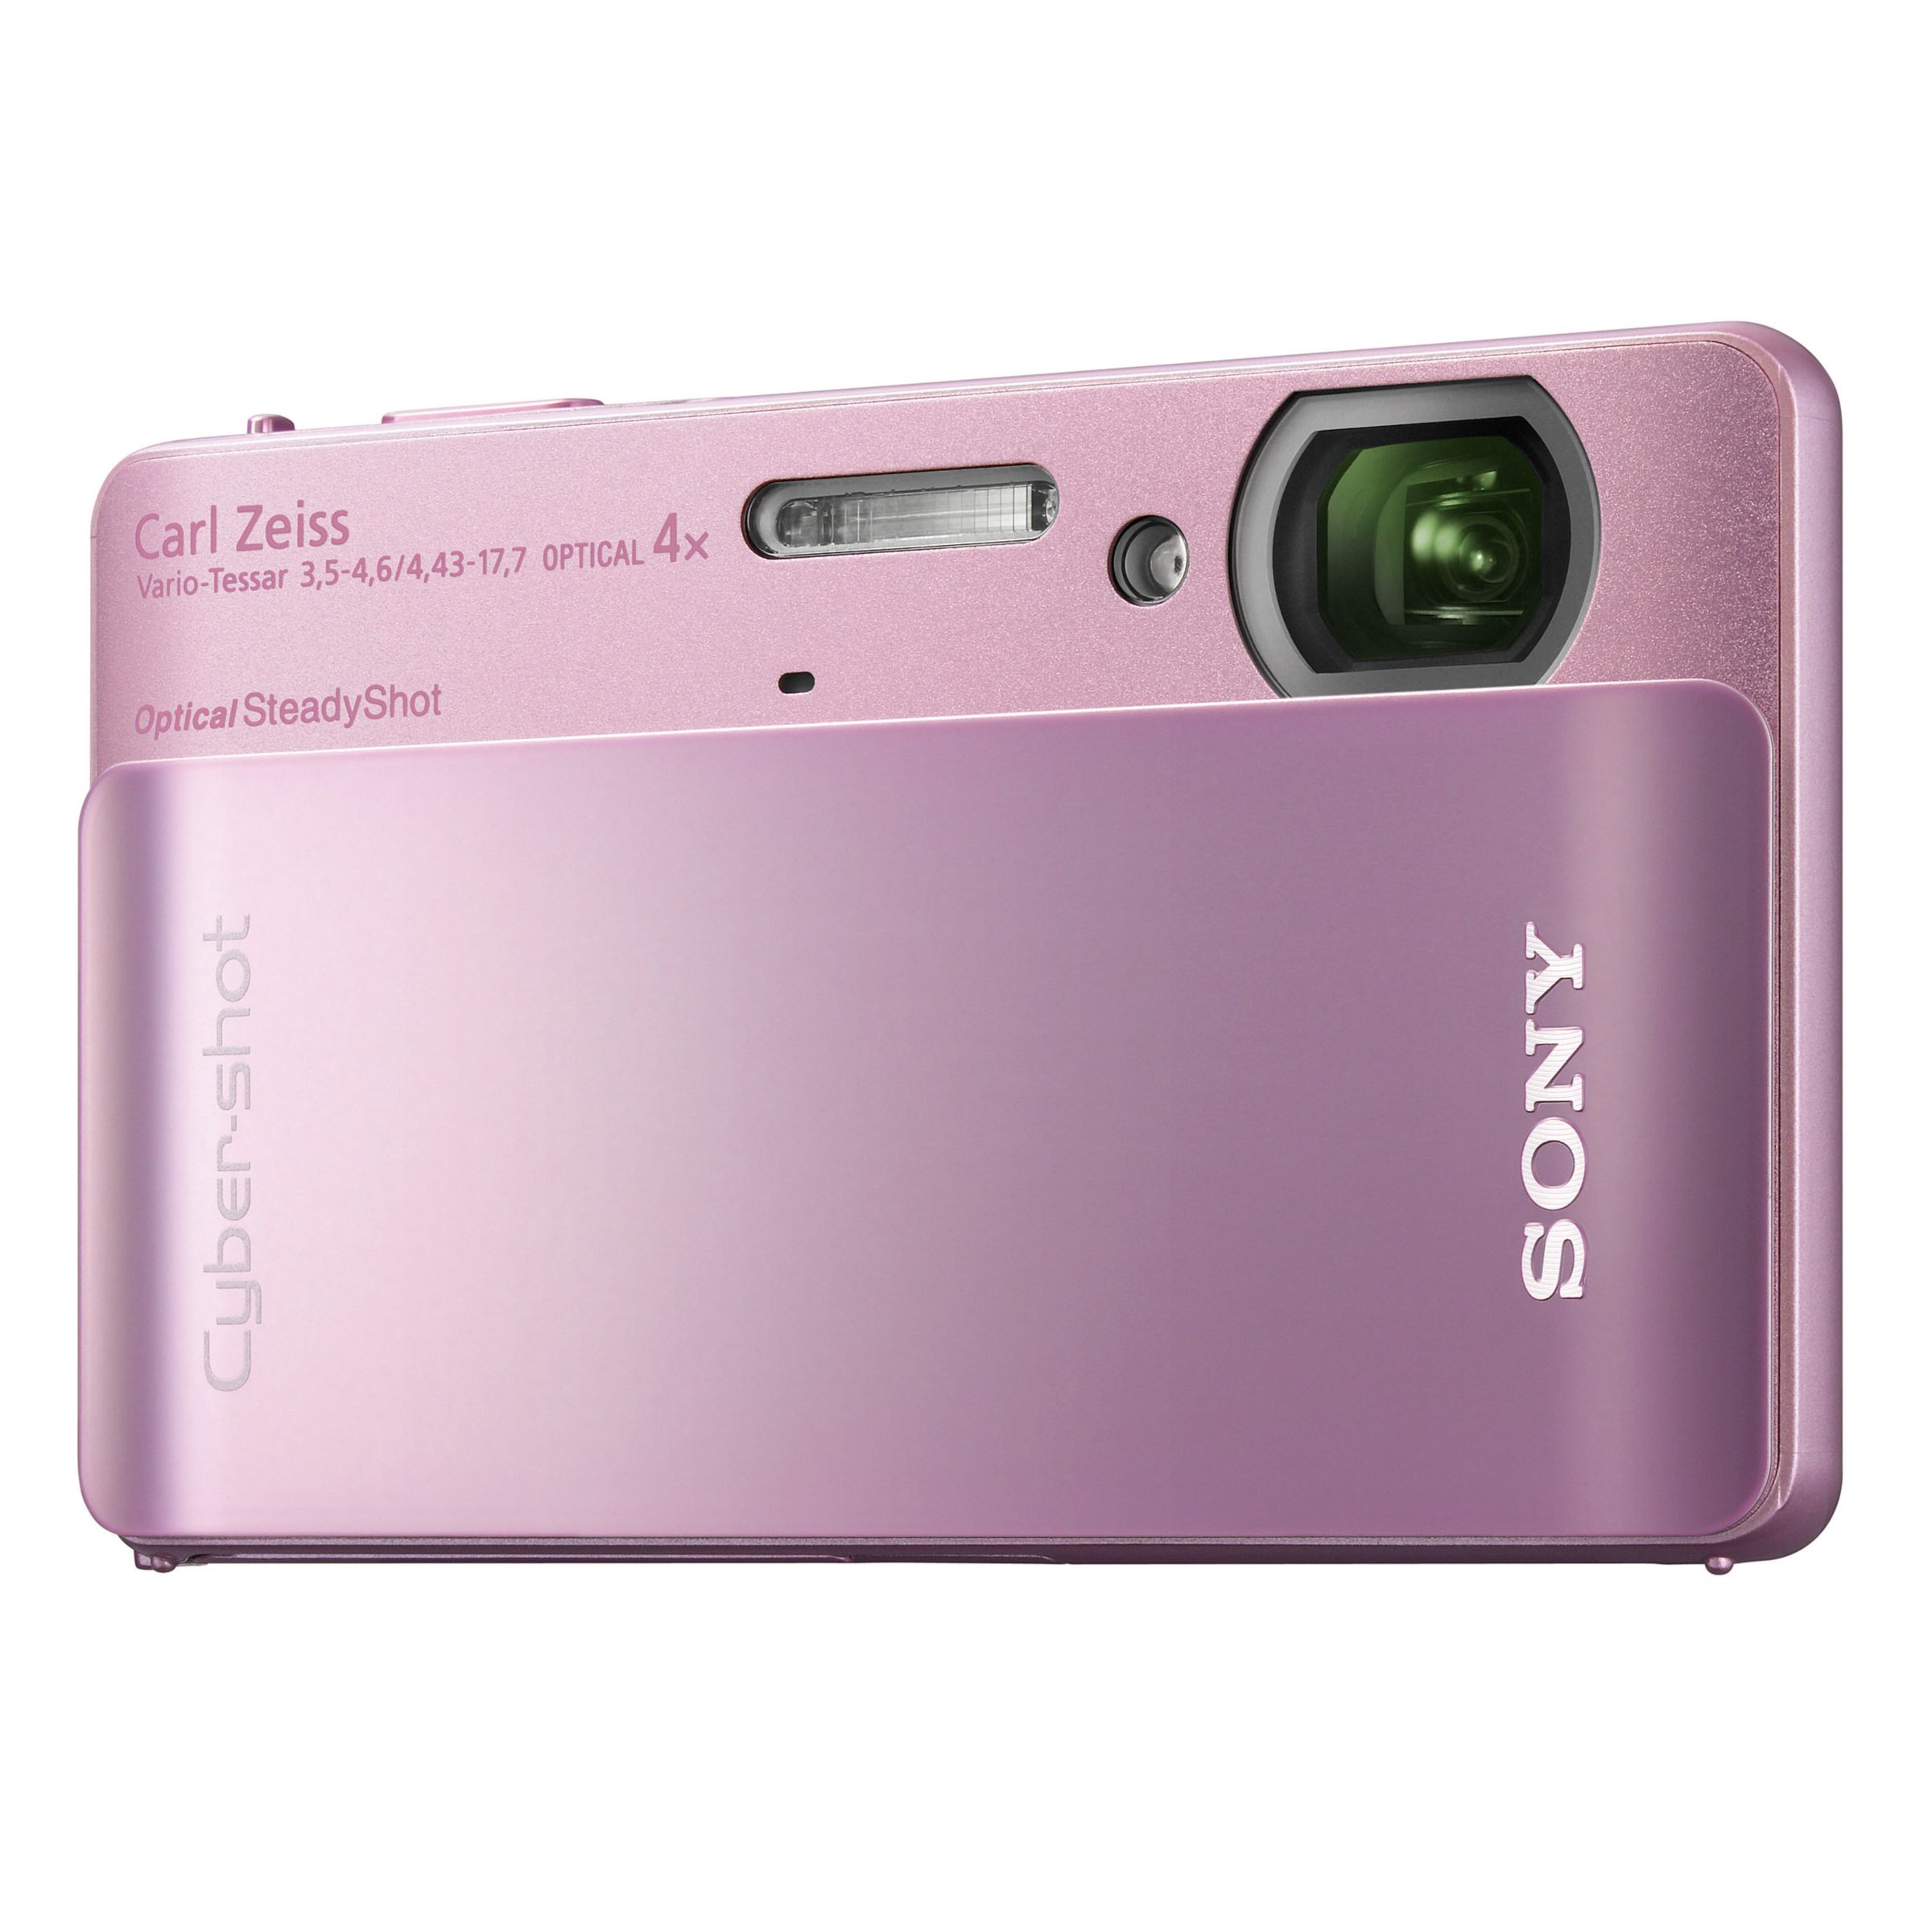 Sony Cyber-shot DSC-TX5P Digital Camera, Pink at John Lewis